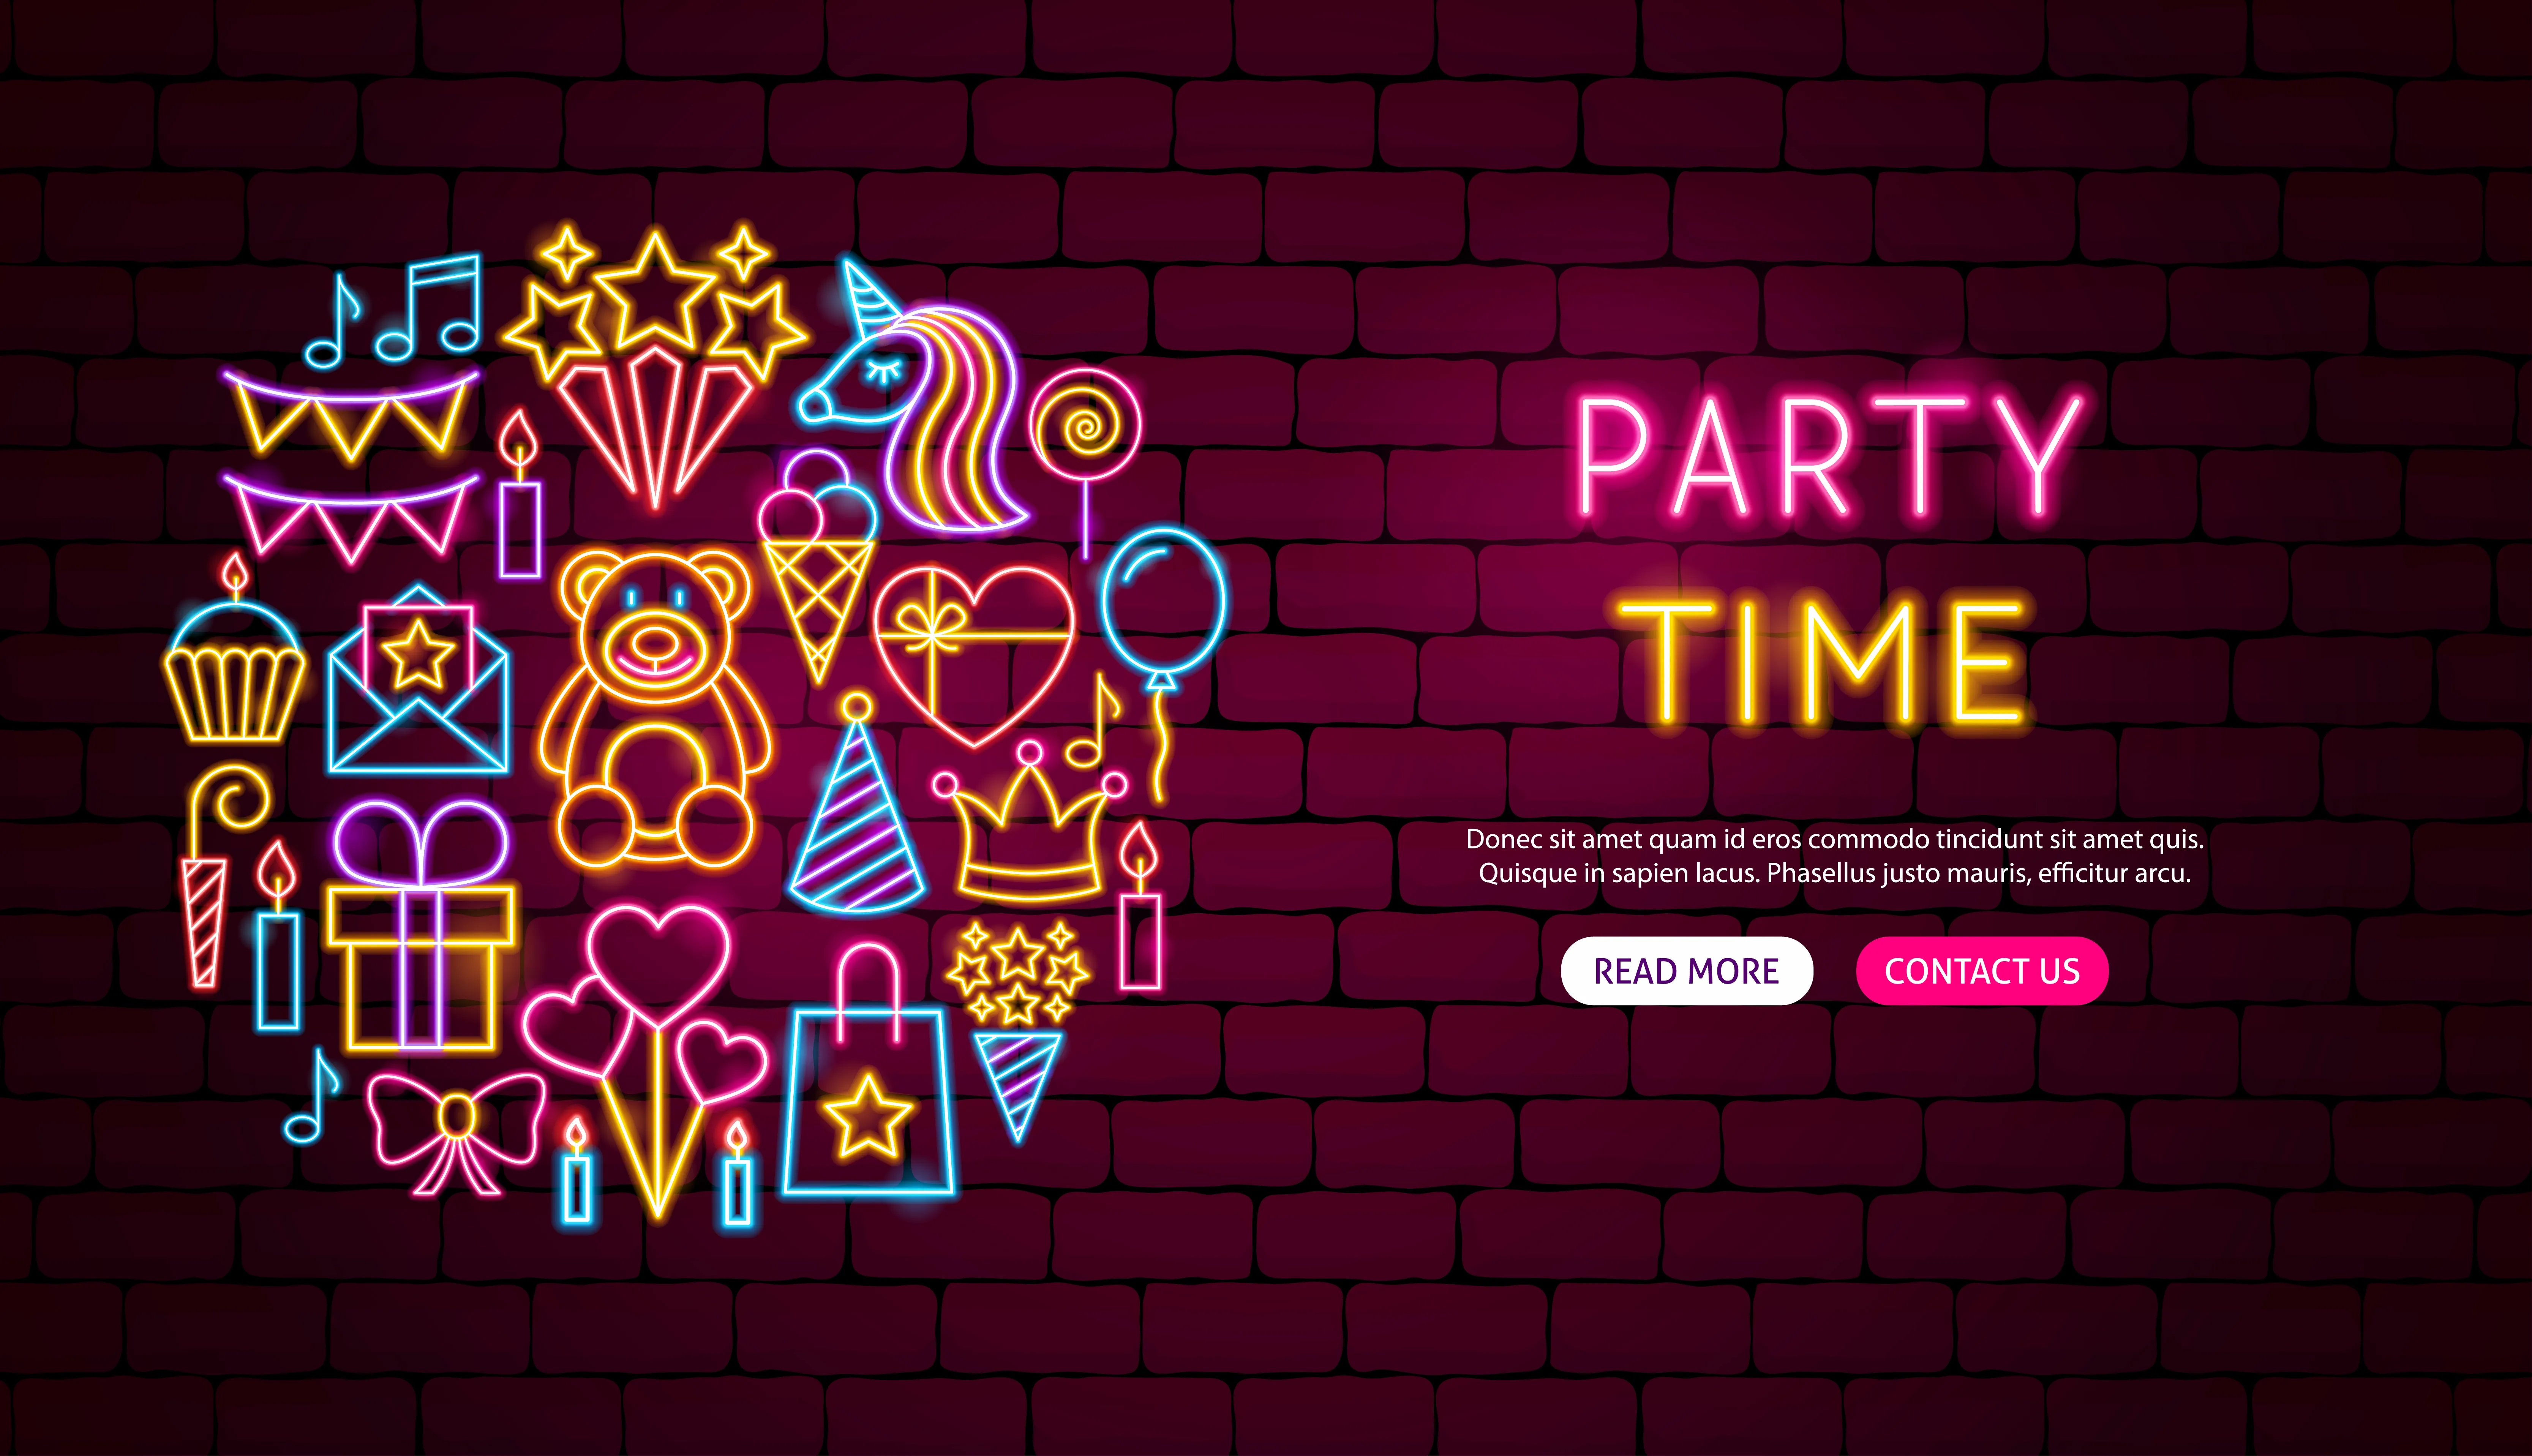 Party time neon banner design - vector illustration of celebration promotion.